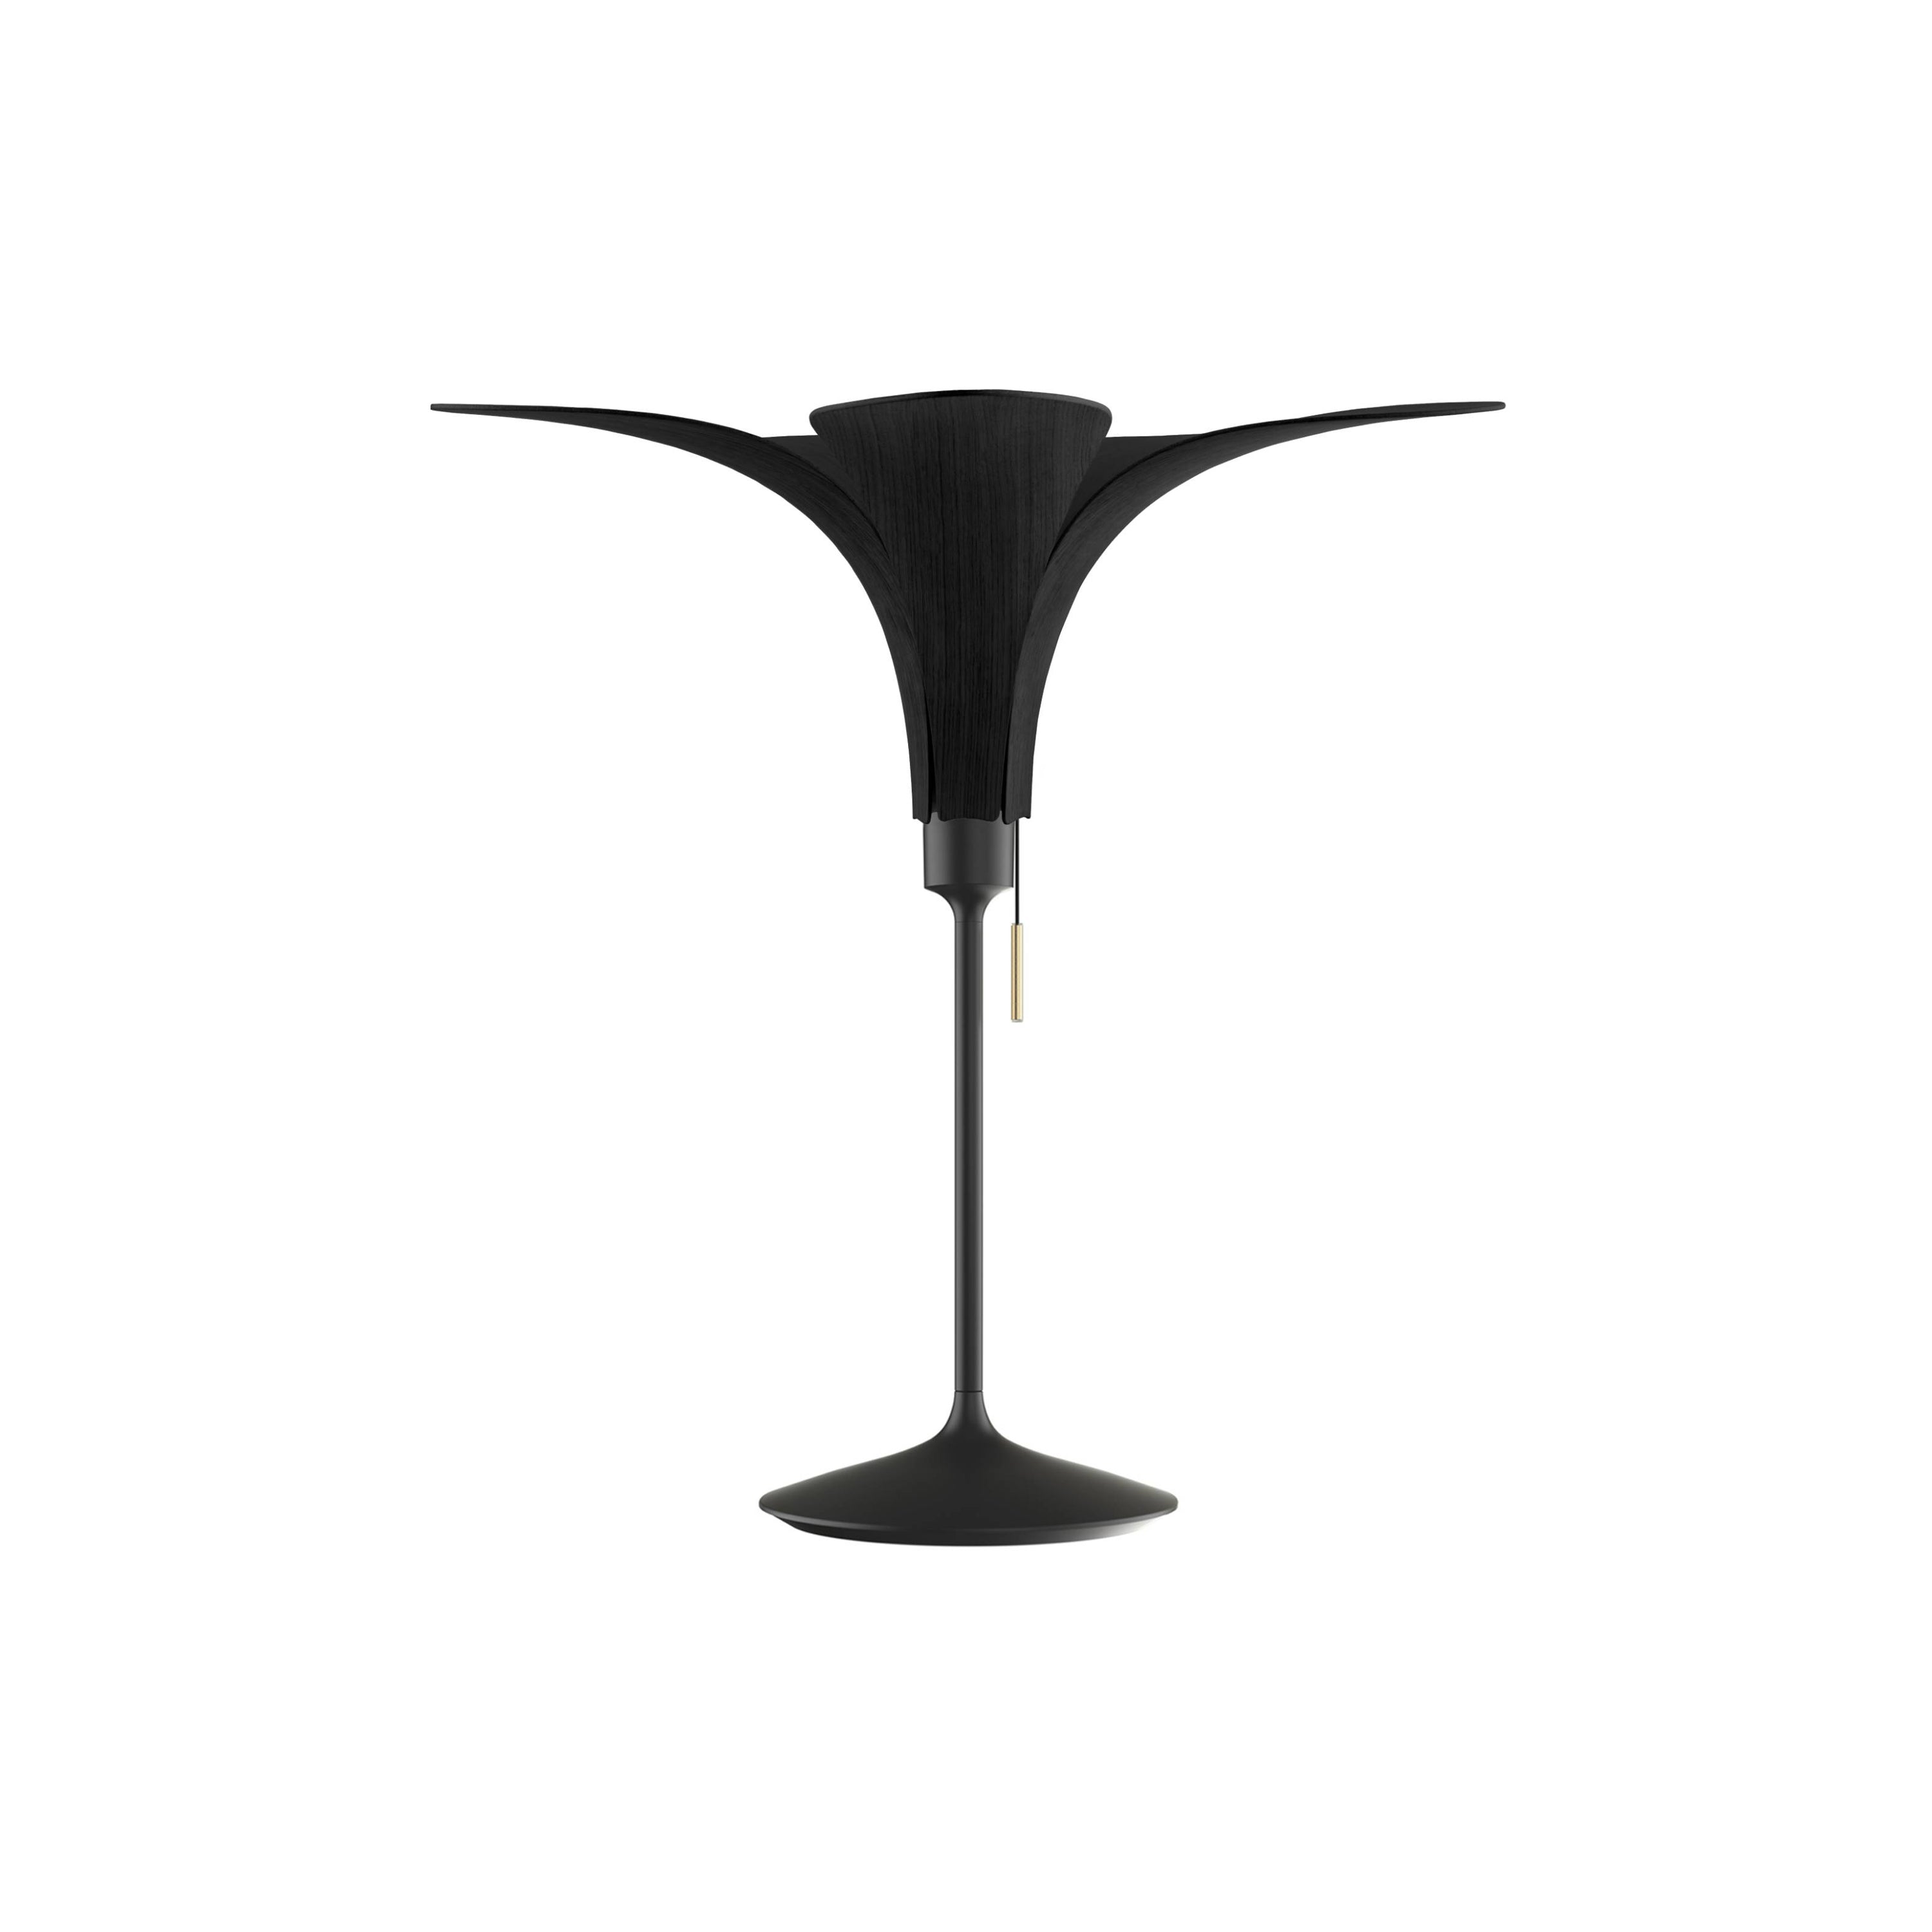 Jazz Champagne Table Lamp: Black Oak + Black